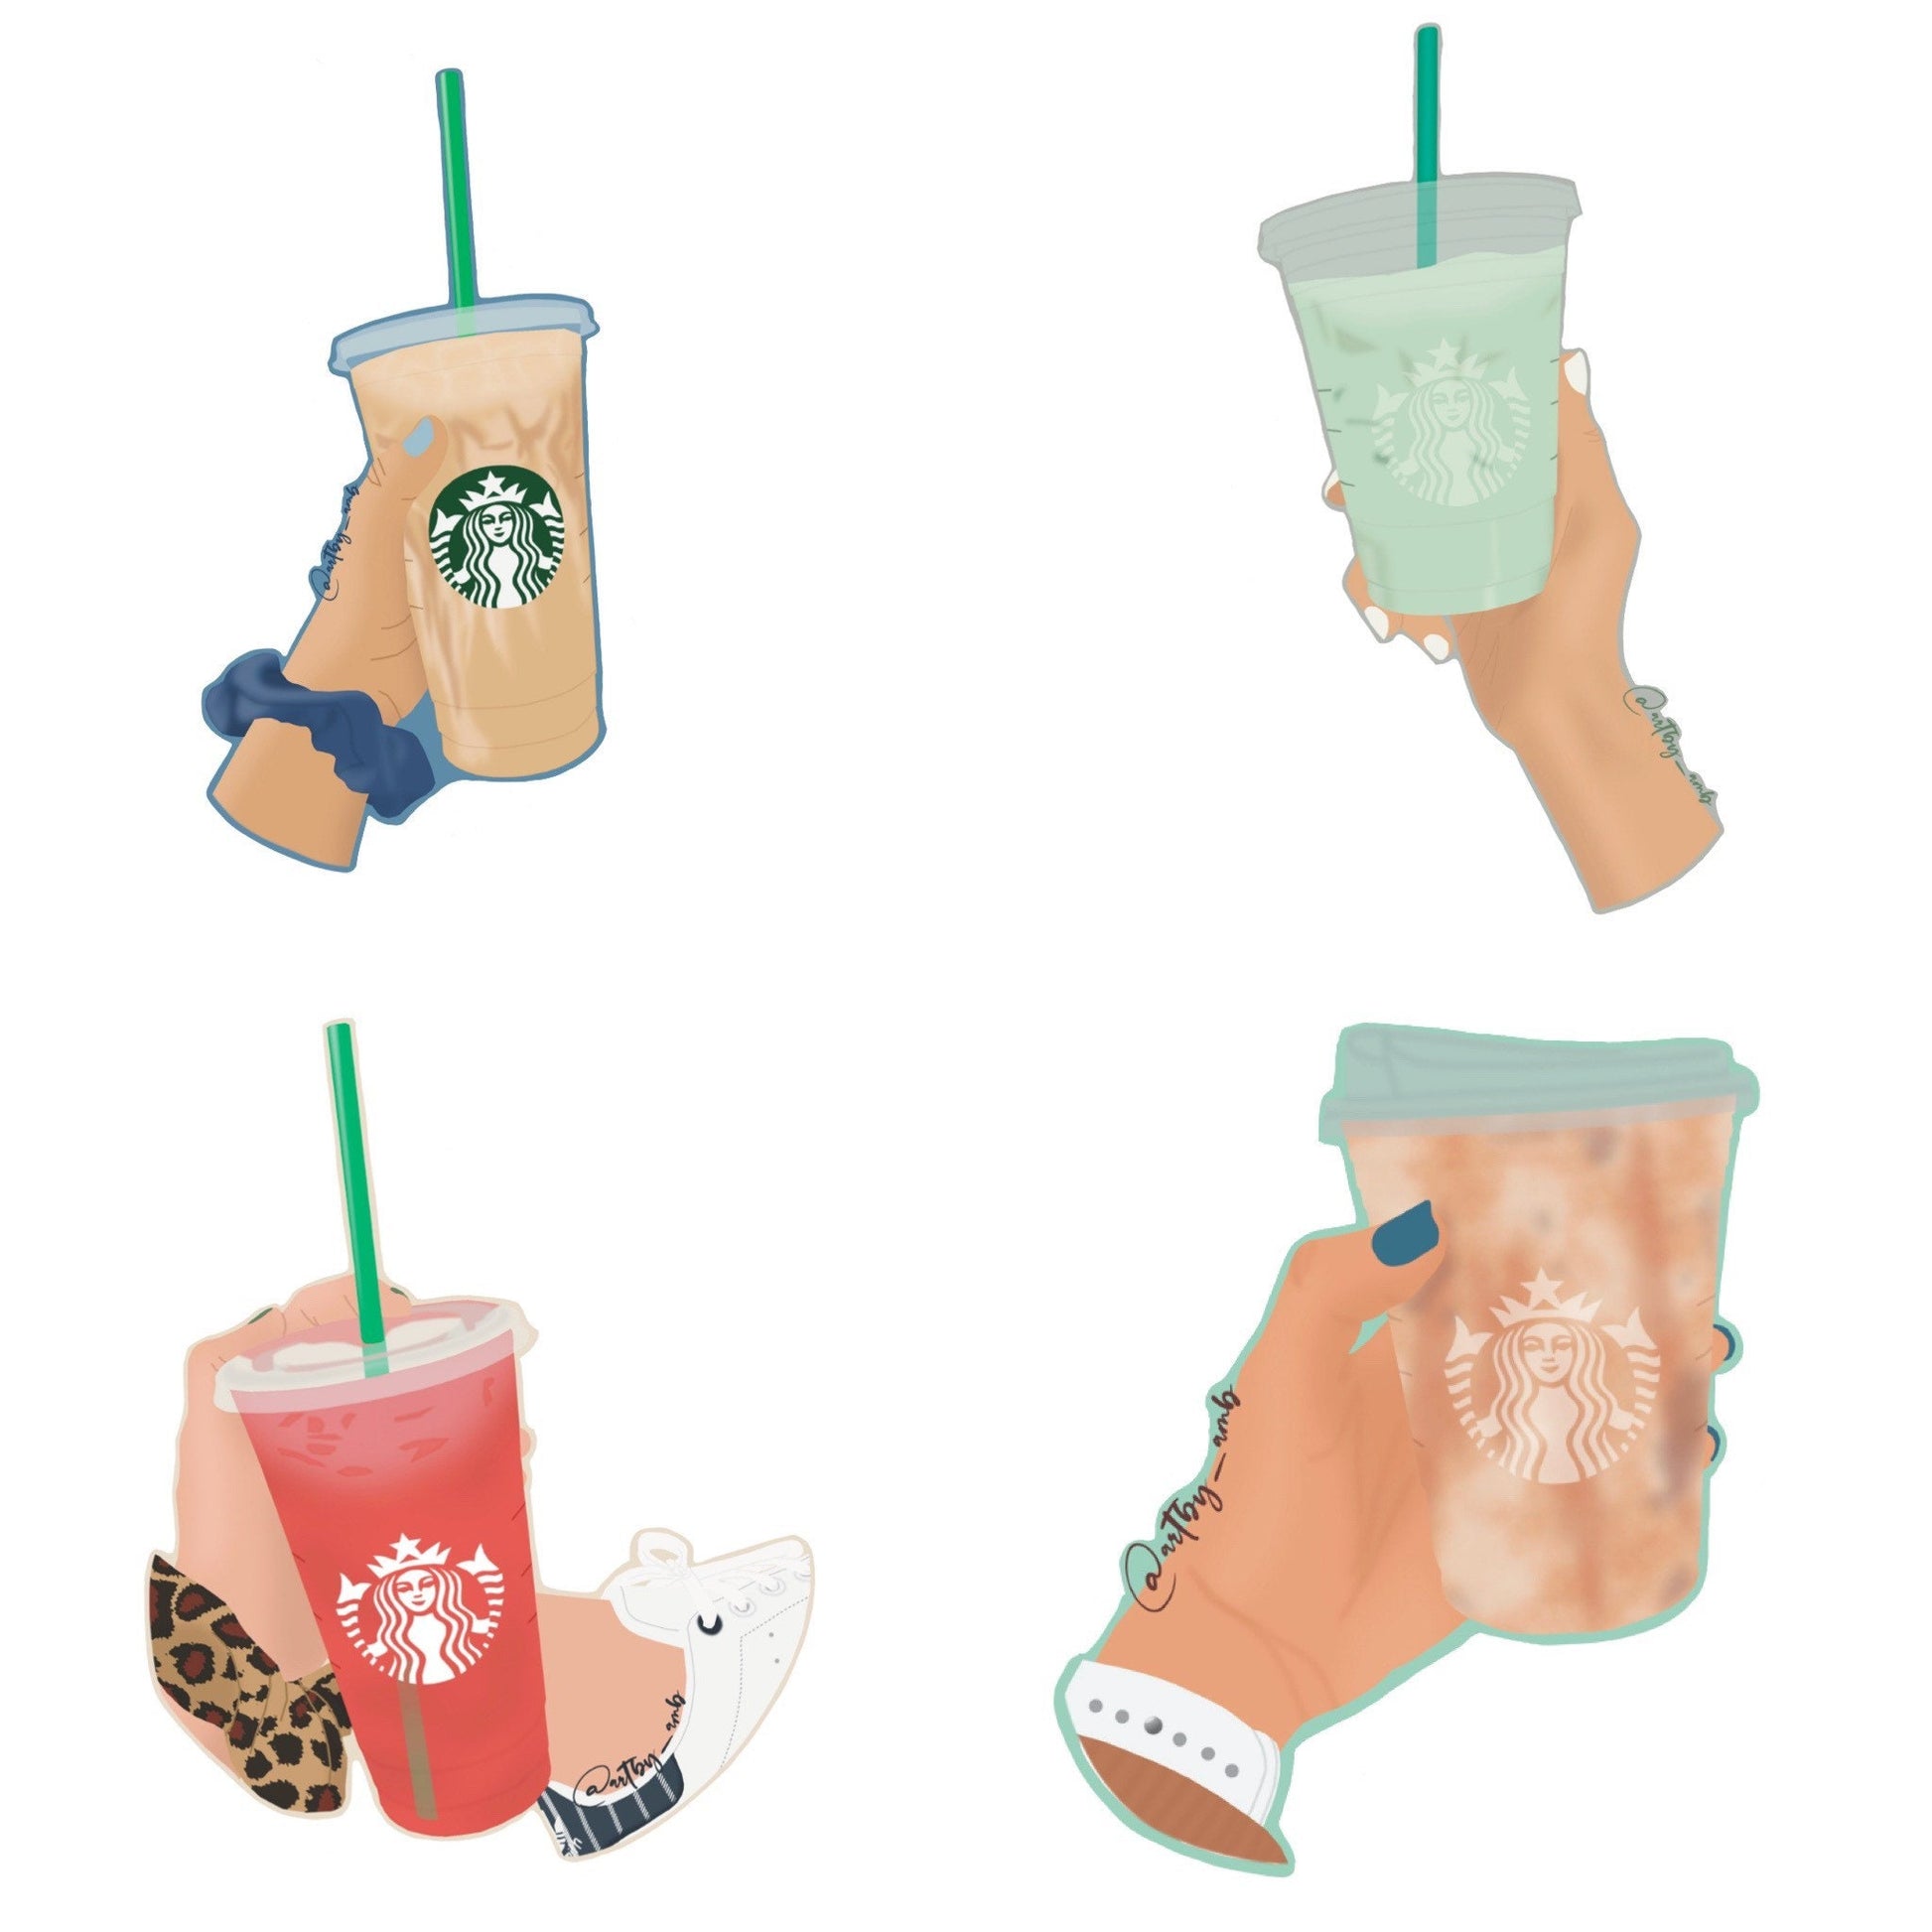 Starbucks Cups 1 Stickers